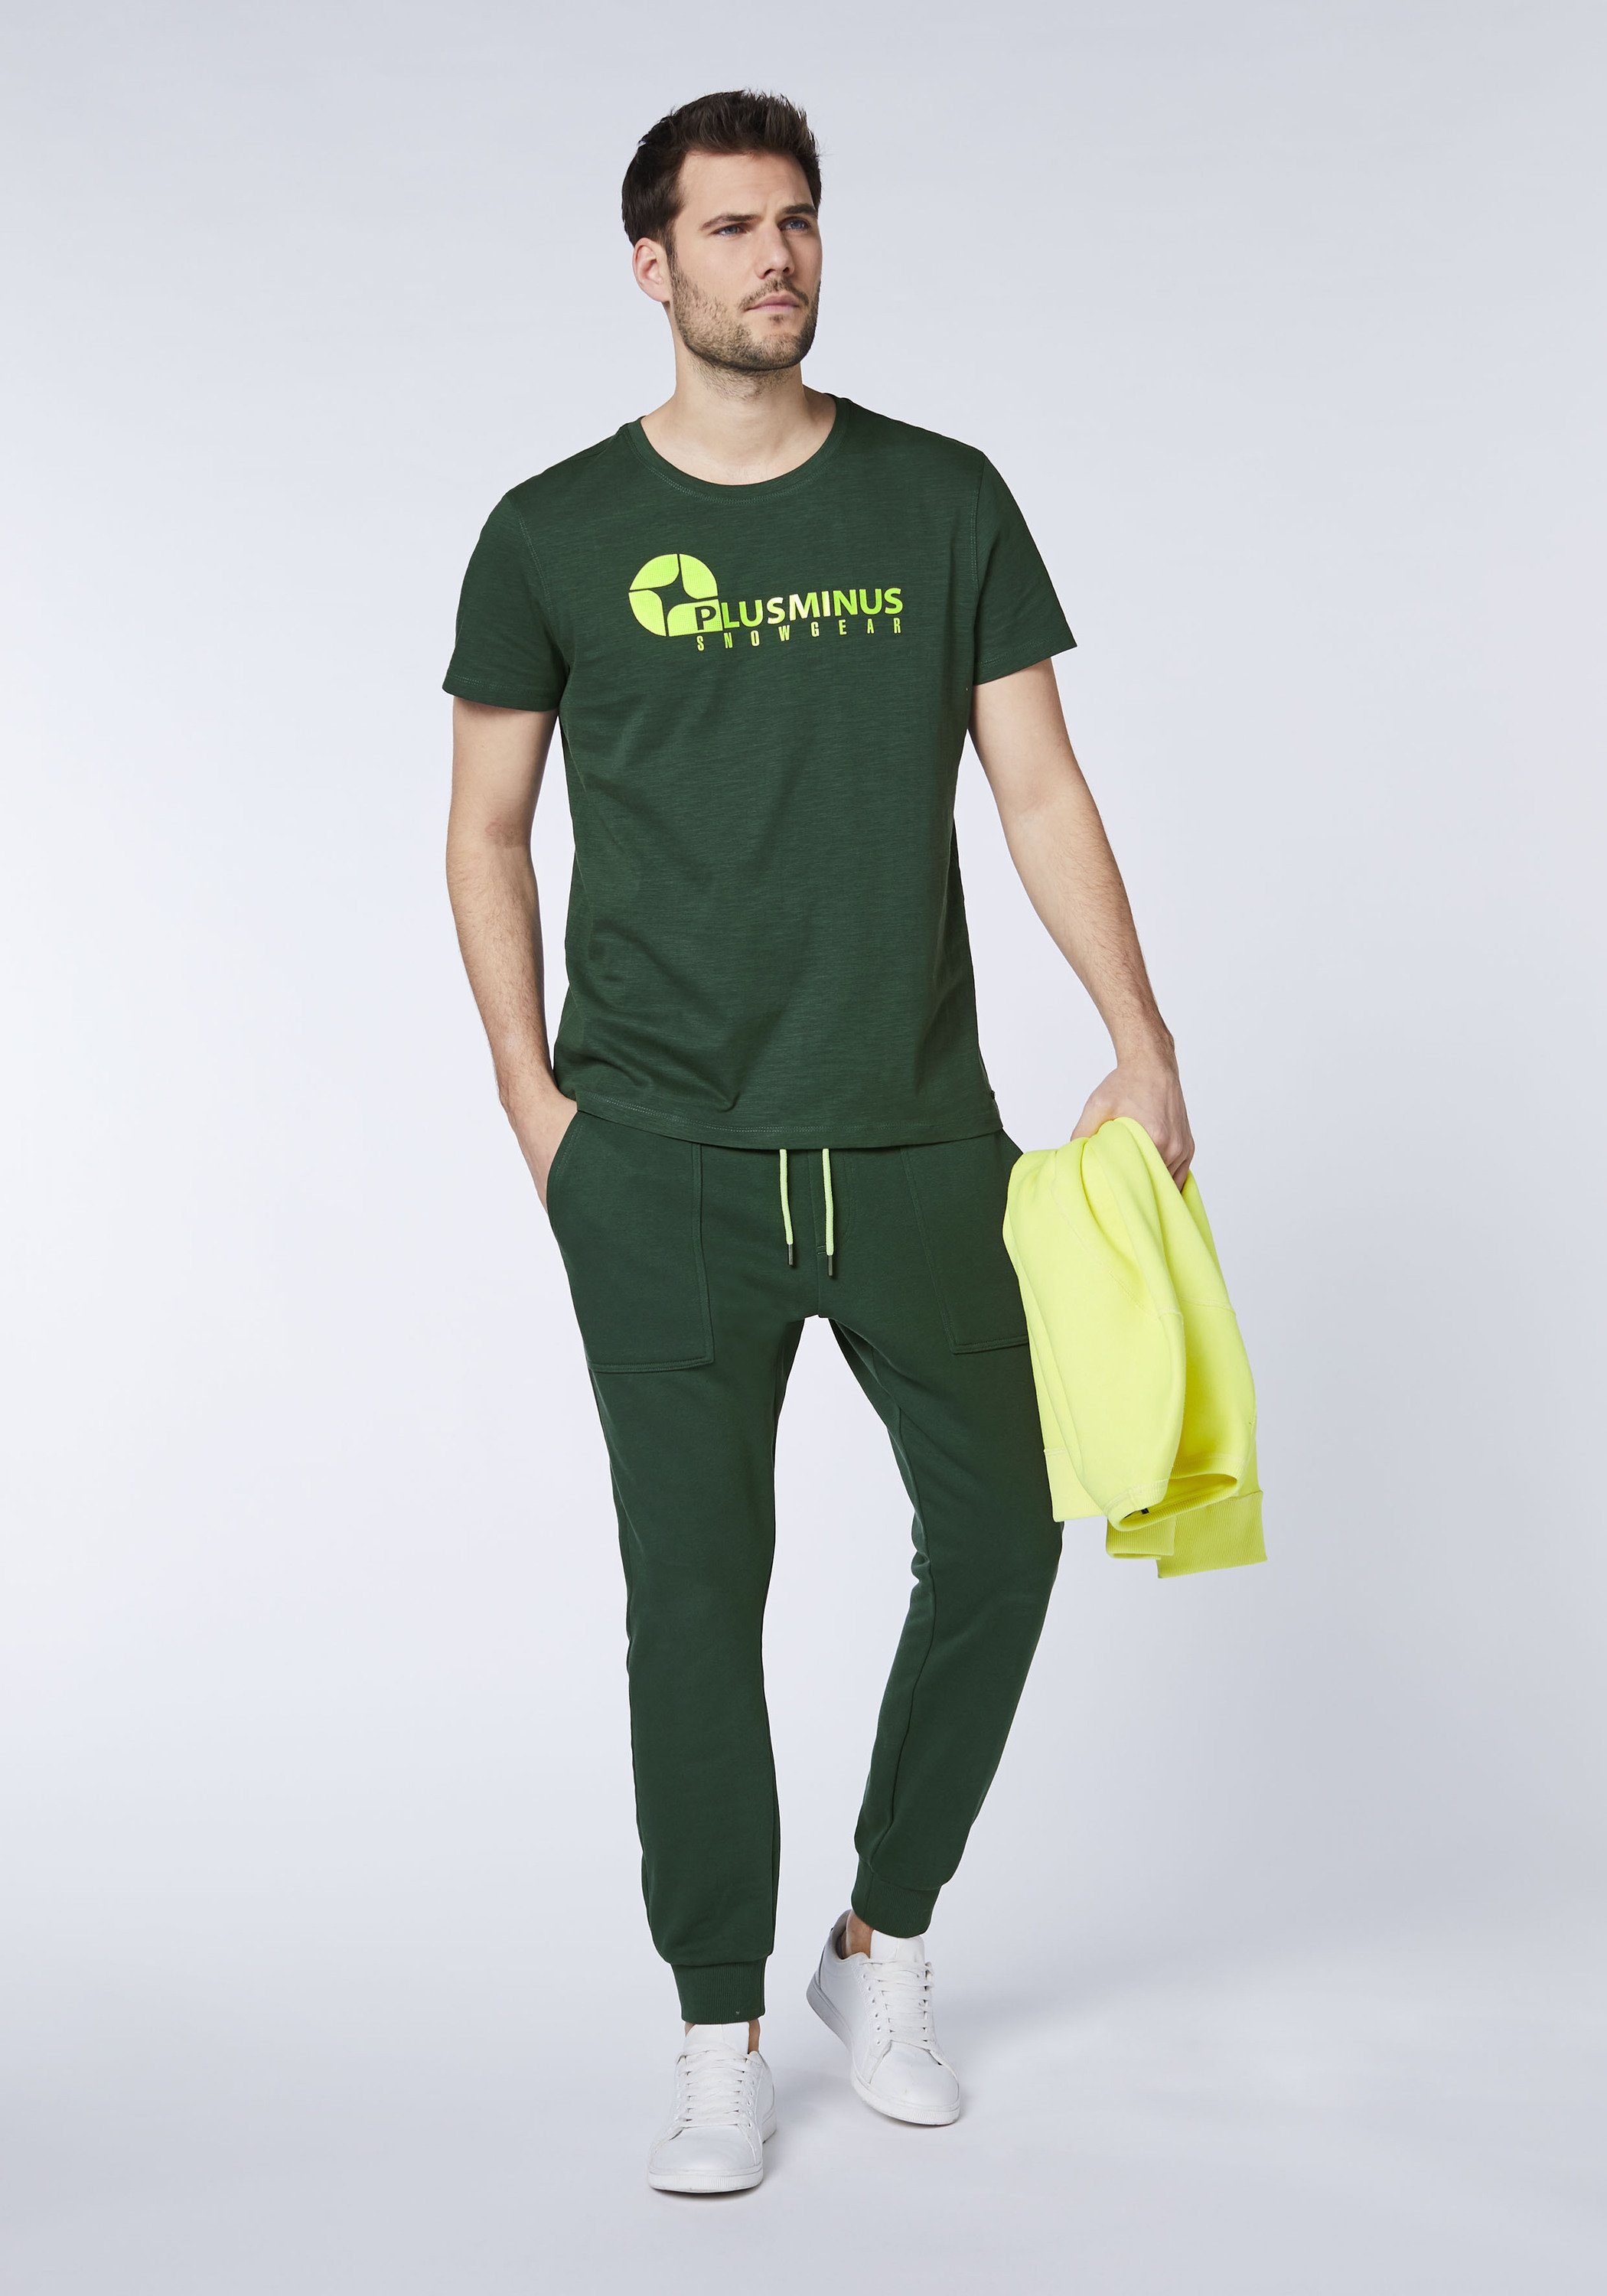 Chiemsee Print-Shirt T-Shirt im PLUS-MINUS-Design 1 Green Gables